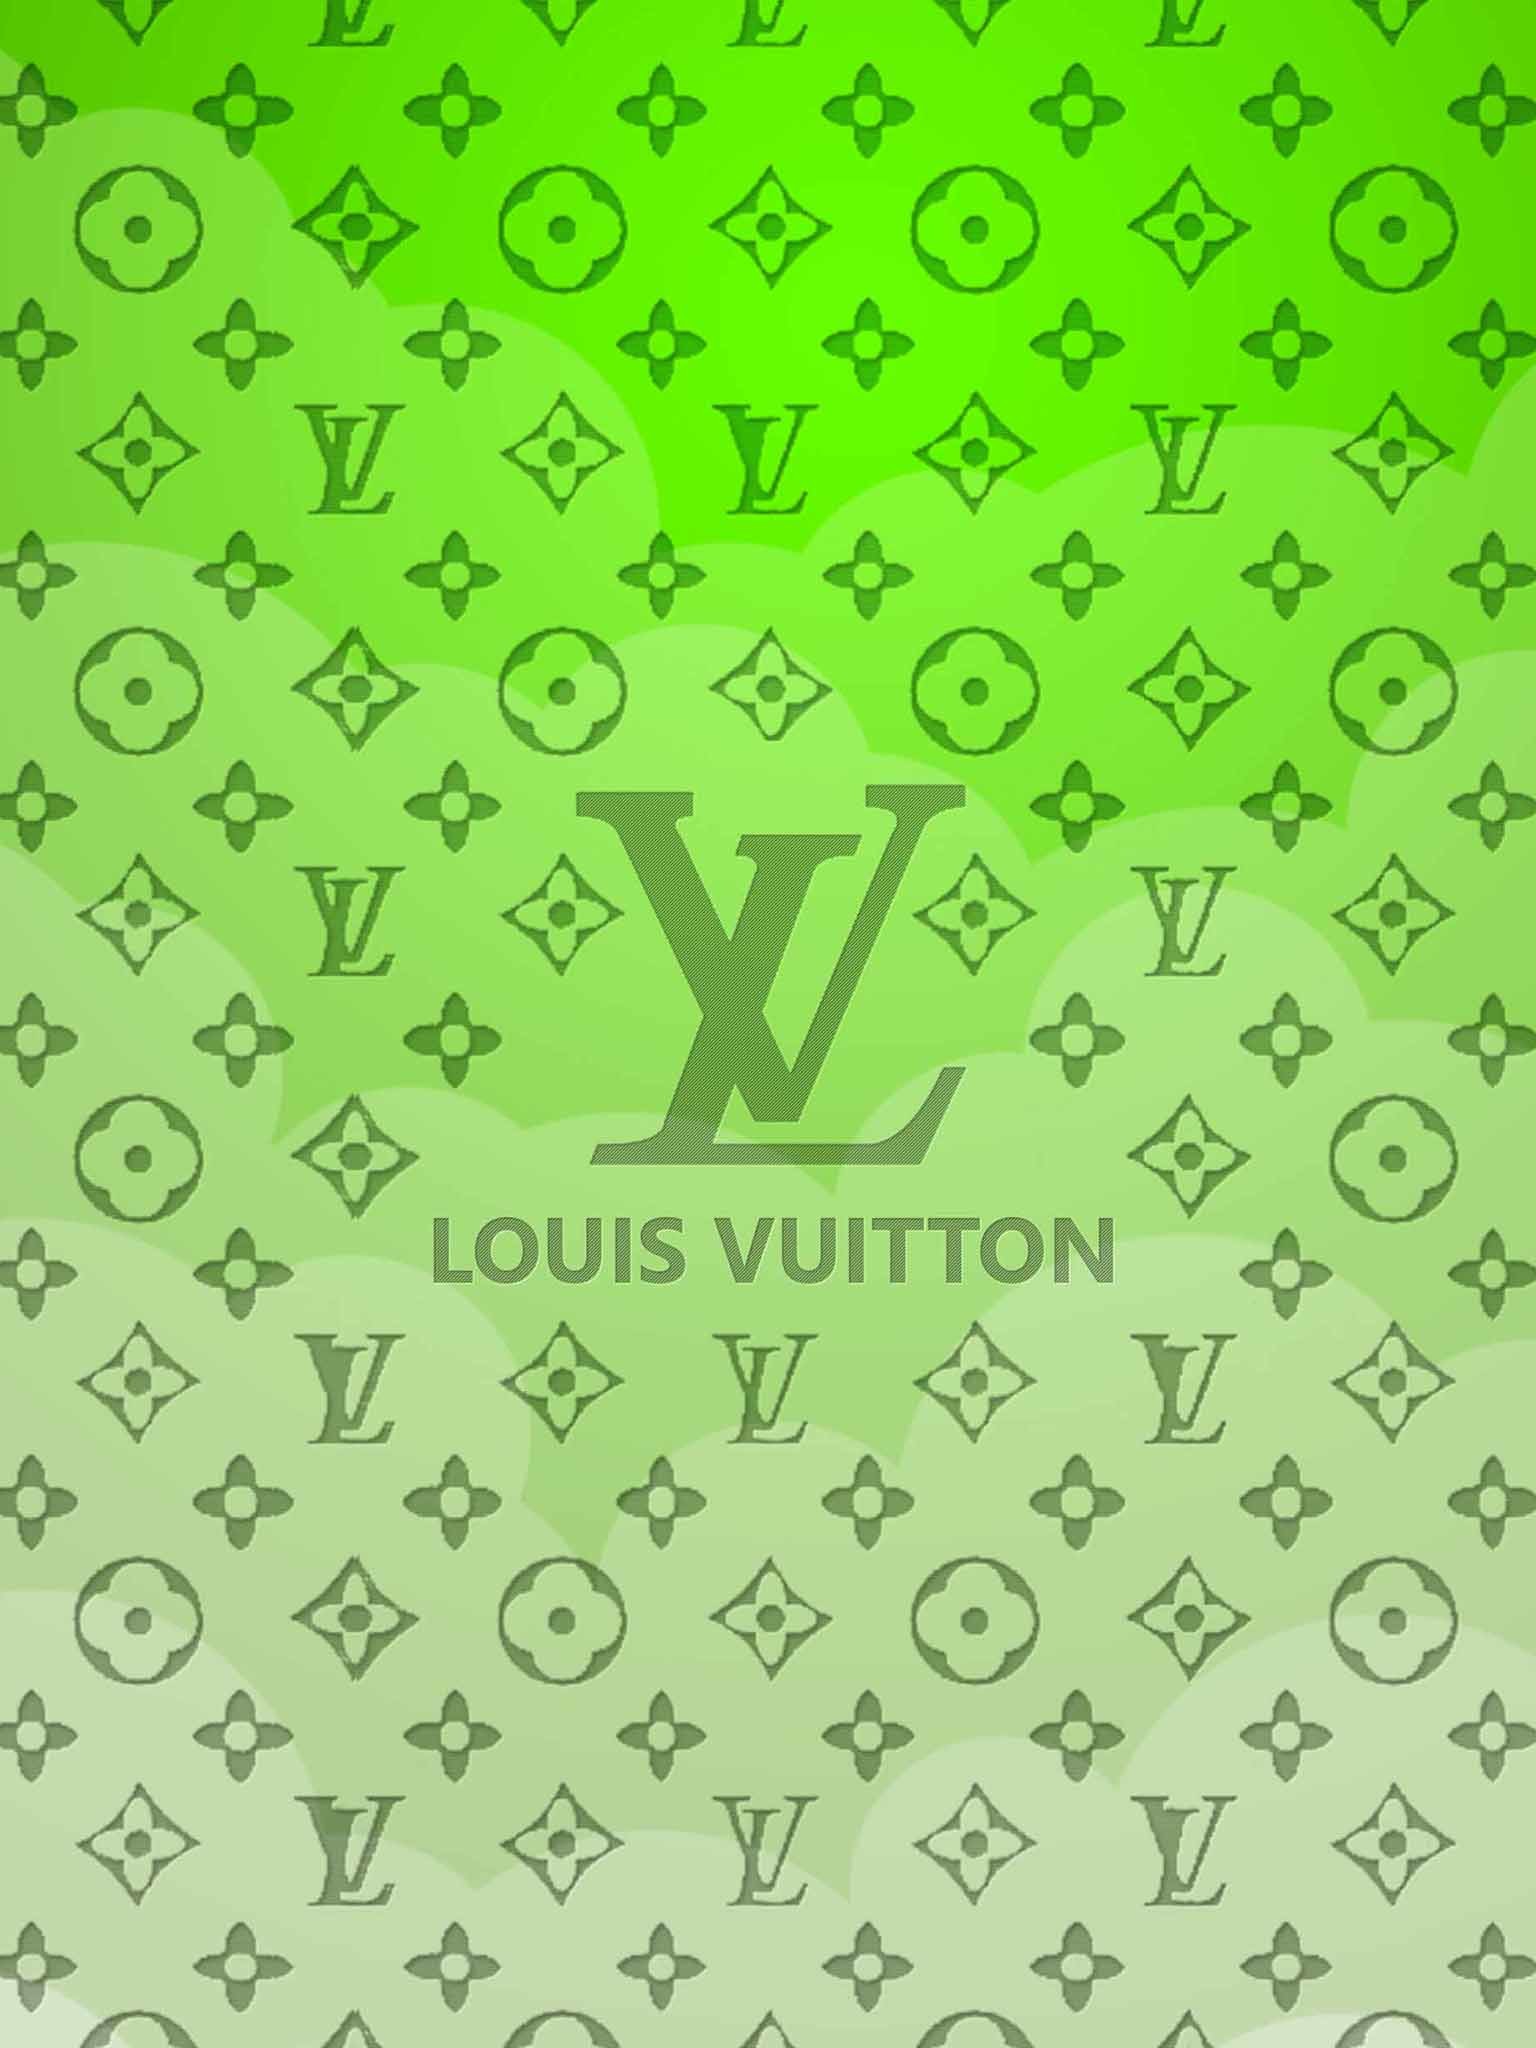 Black and White Louis Vuitton Monogram - Luxurydotcom - iTunes app photo  Louis  vuitton iphone wallpaper, White louis vuitton, Black and white posters